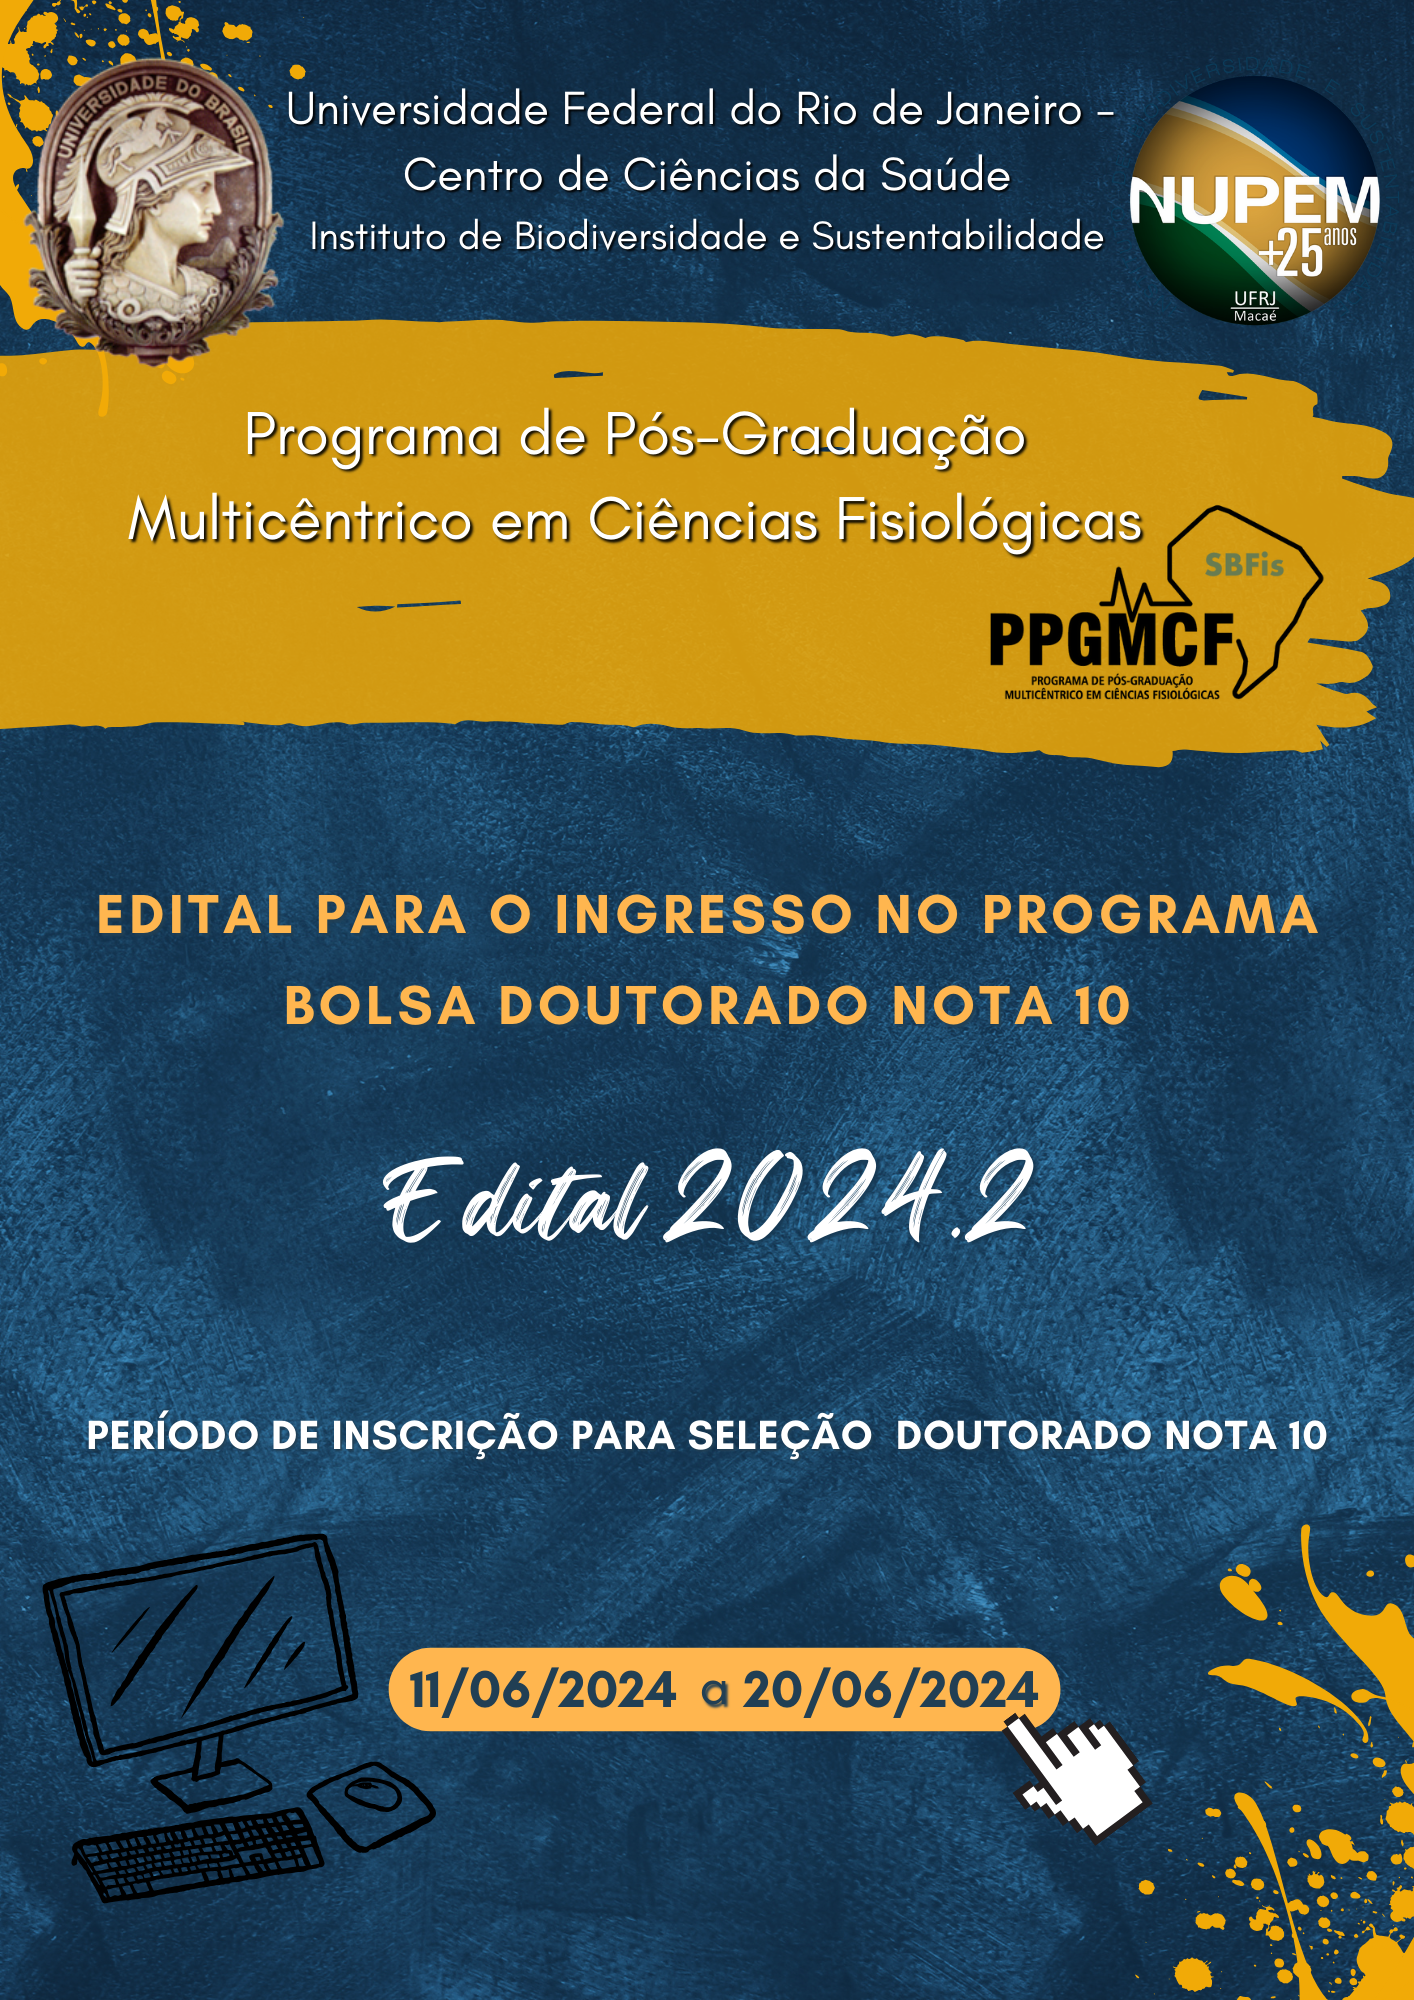 Banner Etdital Nota 10 doutorado